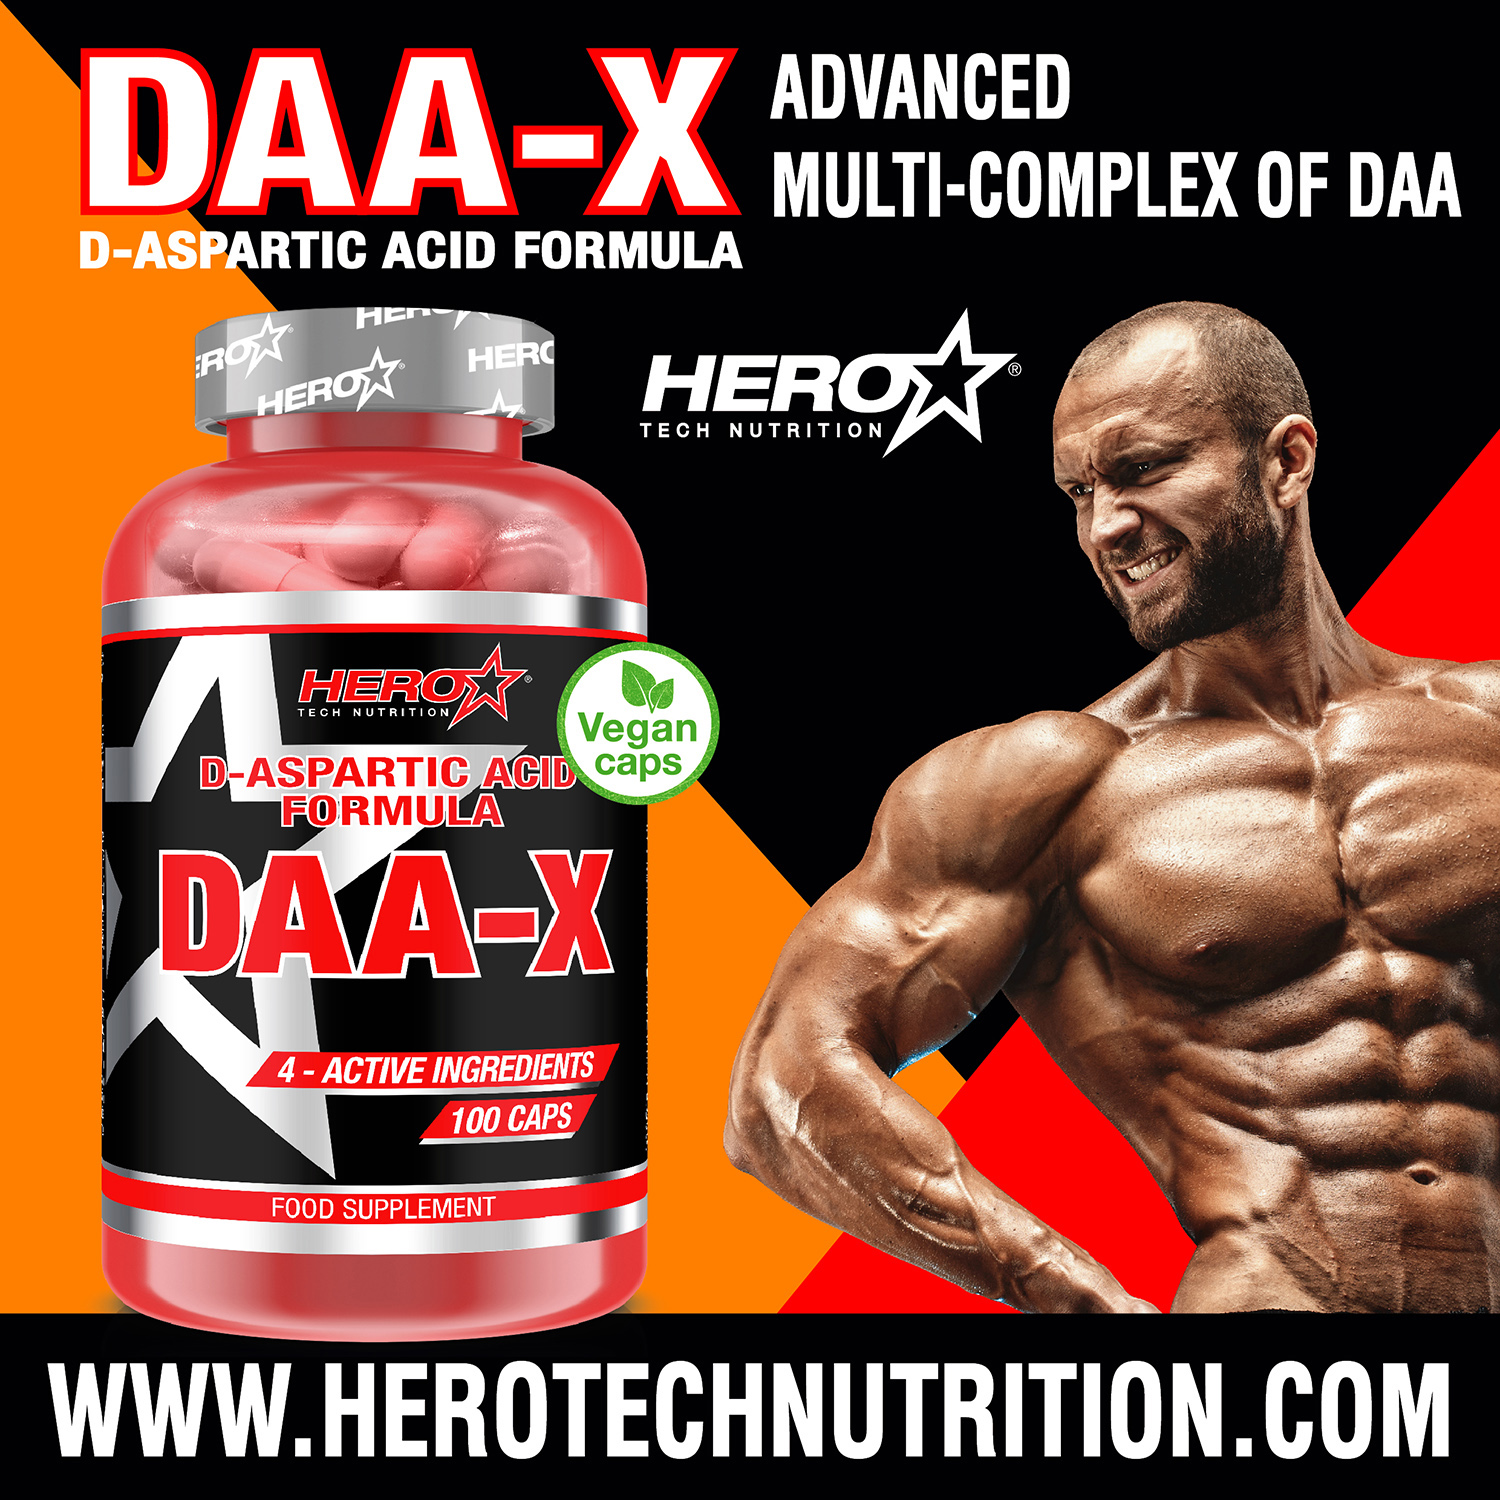 DAA-X ACID ASPARTIC HERO TECH NUTRITION tiredness fatigue